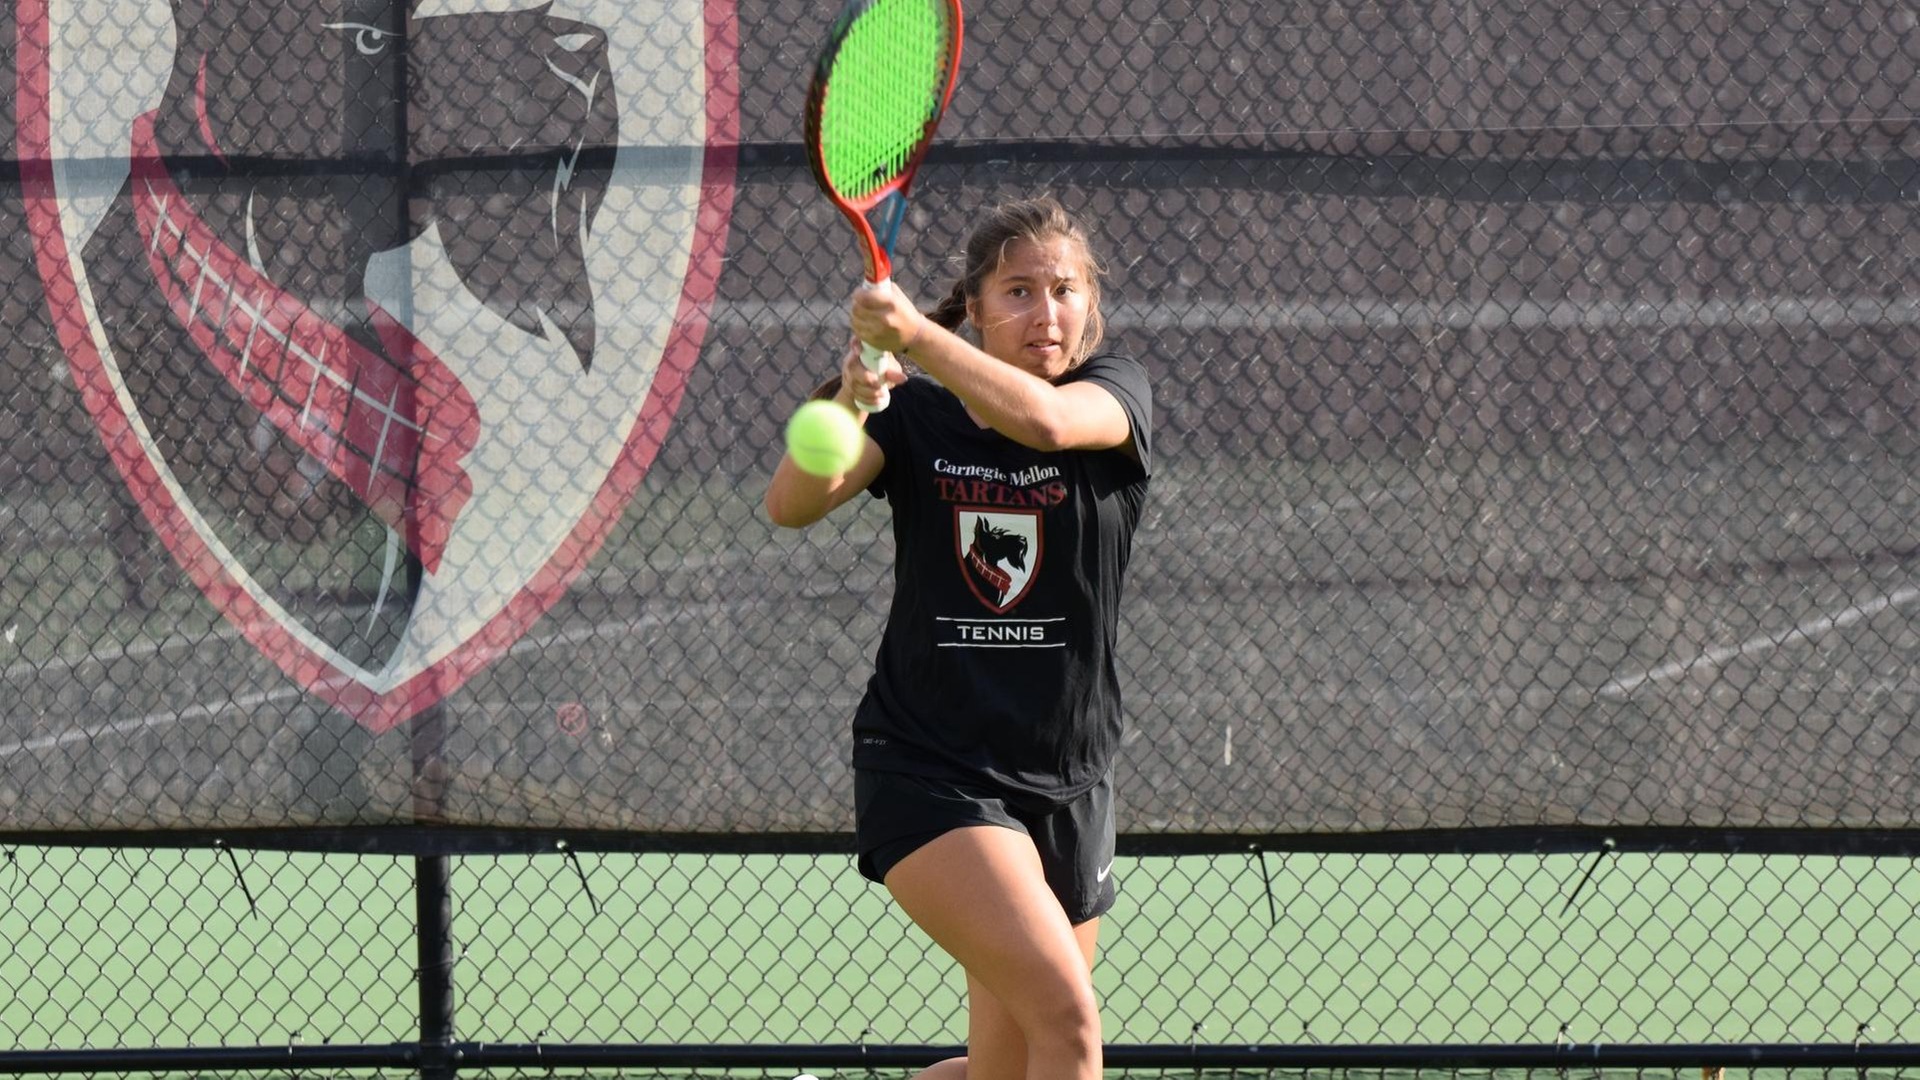 women's tennis player wearing a black shirt and black shorts swinging a racquet